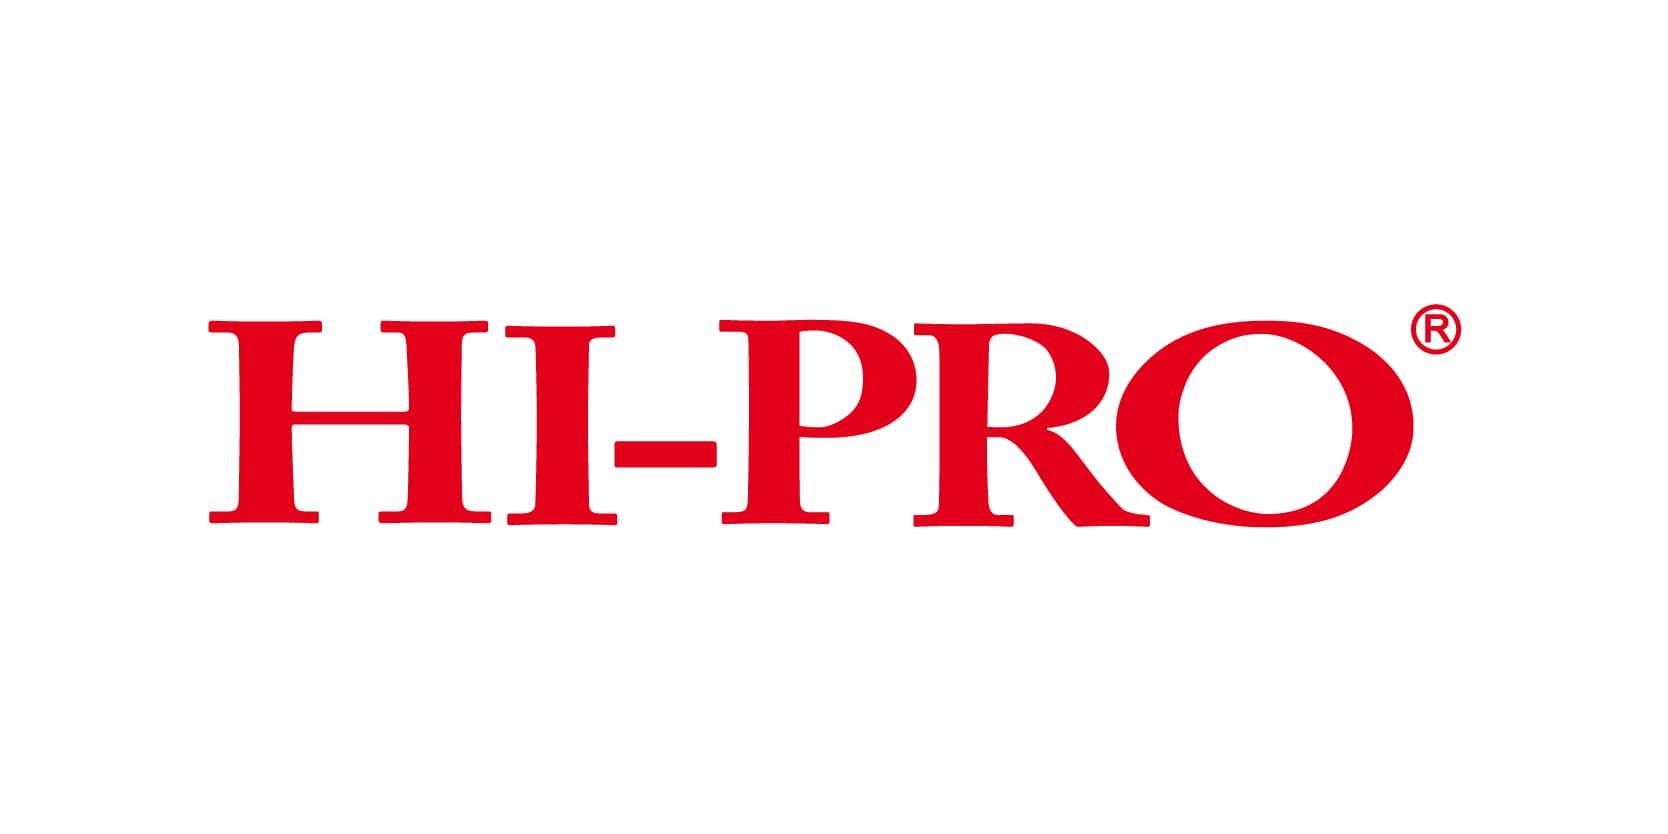 COMPTEUSE DE BILLET HI-PRO HL2100 (HL2100) à 1 790,00 MAD -   MAROC